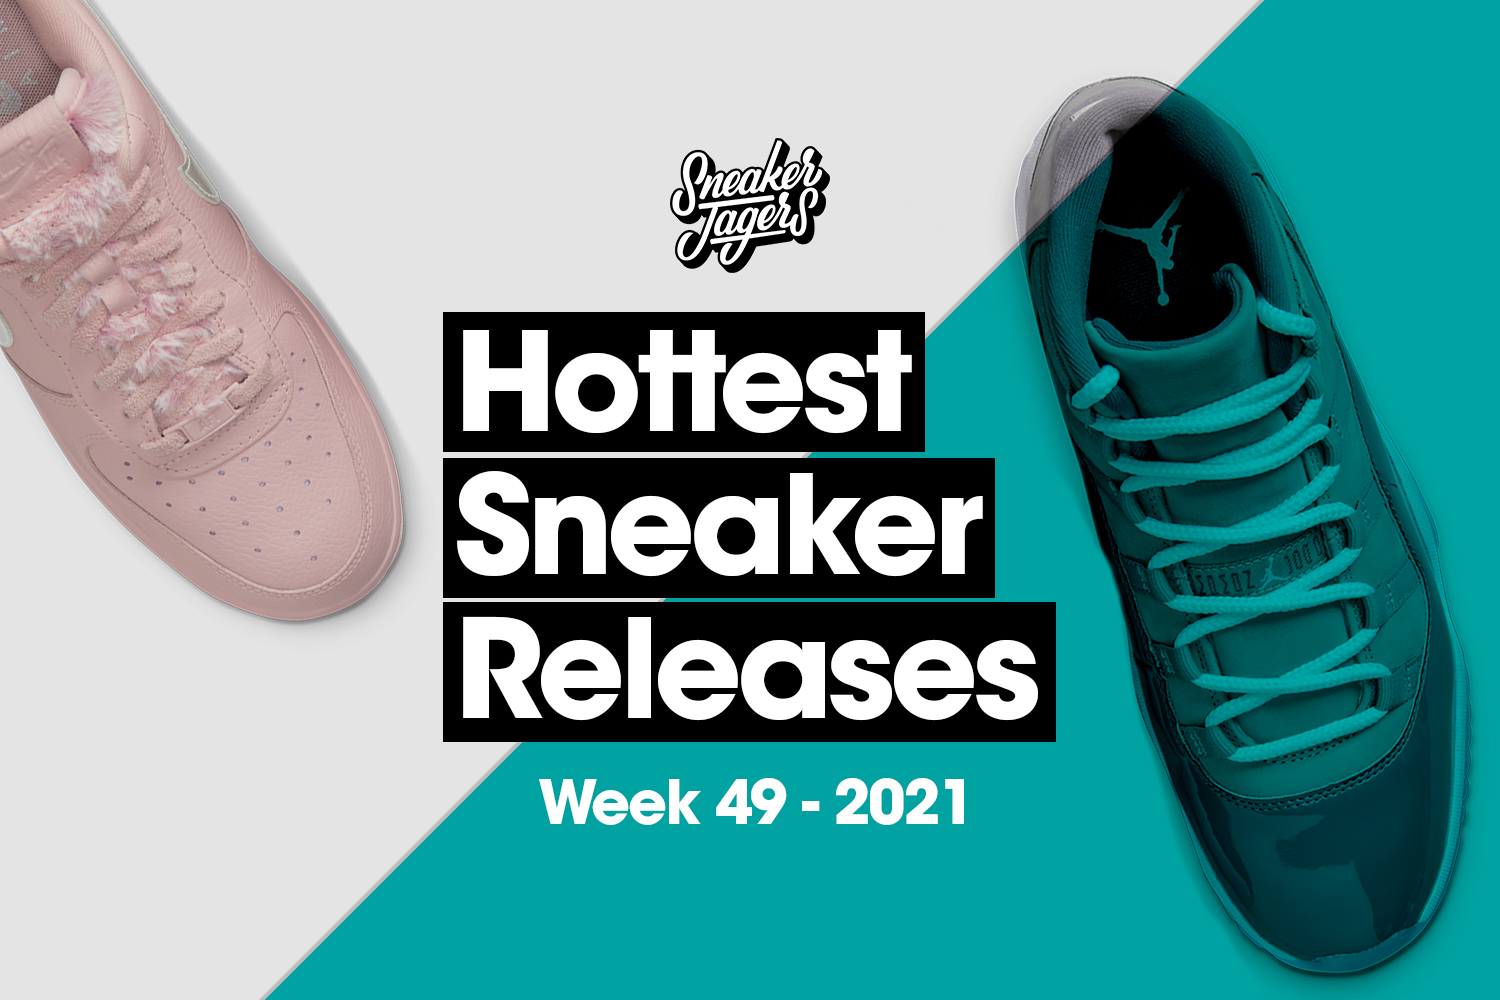 Hottest Sneaker Releases - Week 49